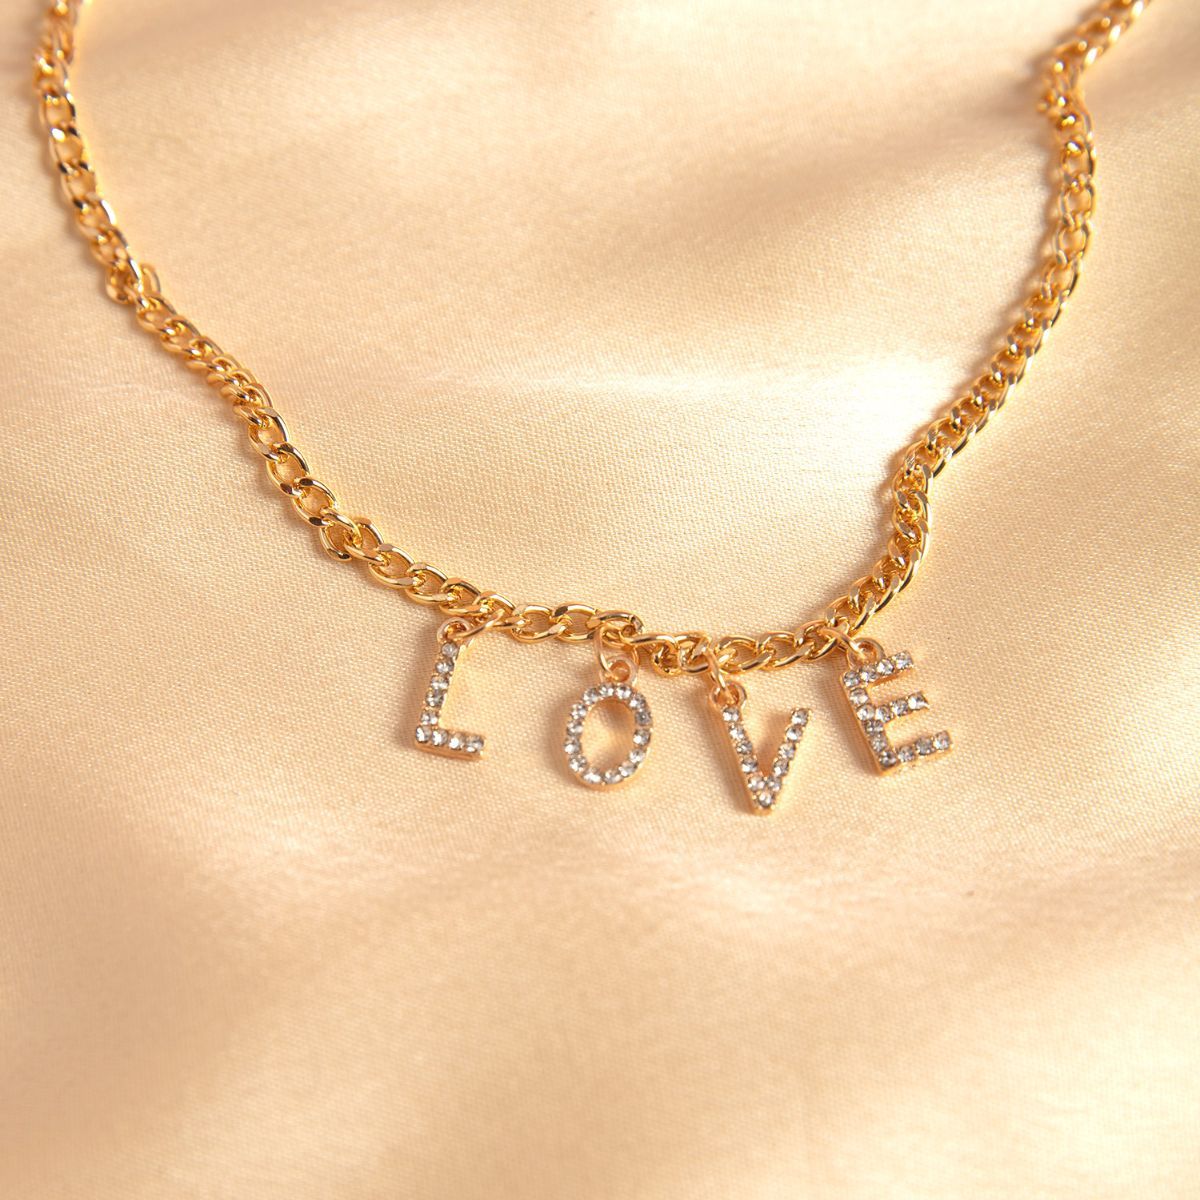 BAUBLEBAR Charis Love Script Pendant Necklace in Gold Tone, 16